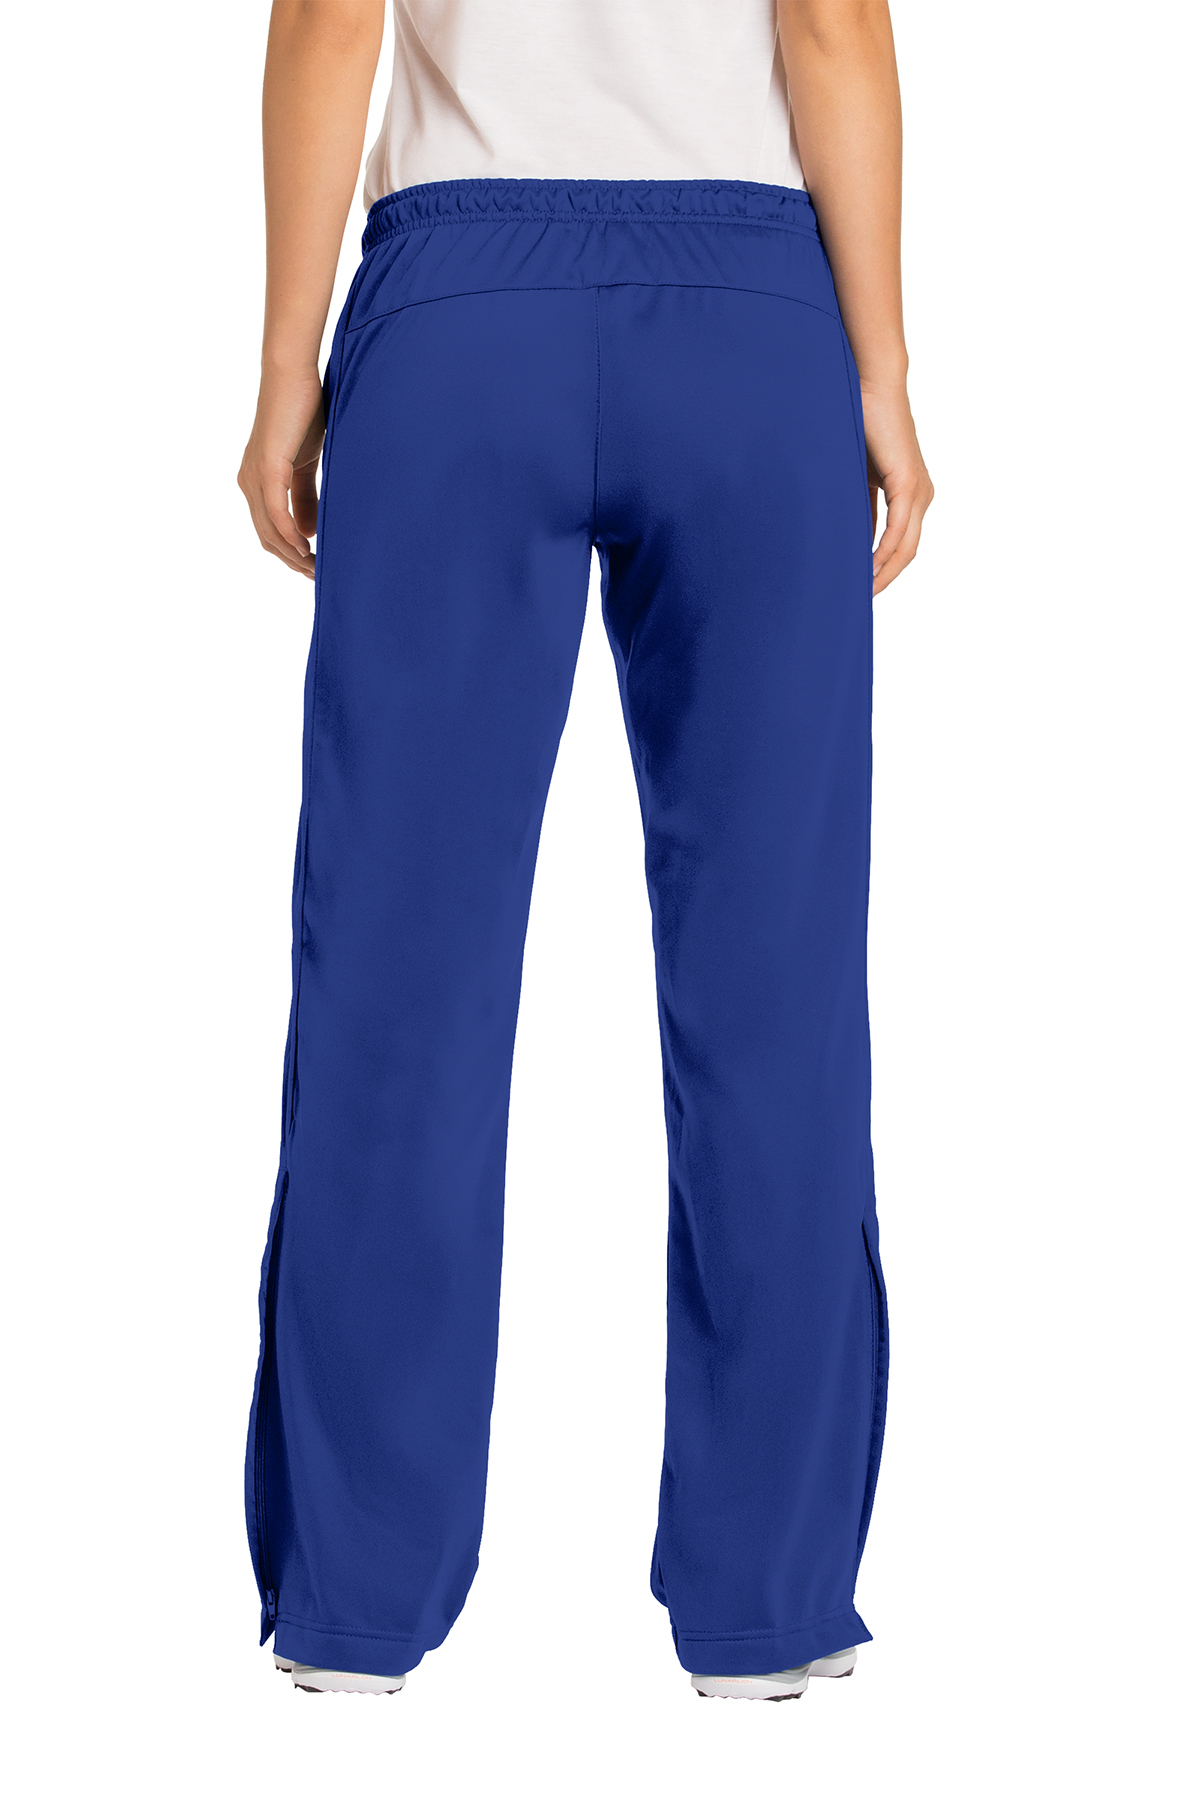 Pro Spirit Pants Womens Large Blue Track Pants Casual Training Comfort  Ladies